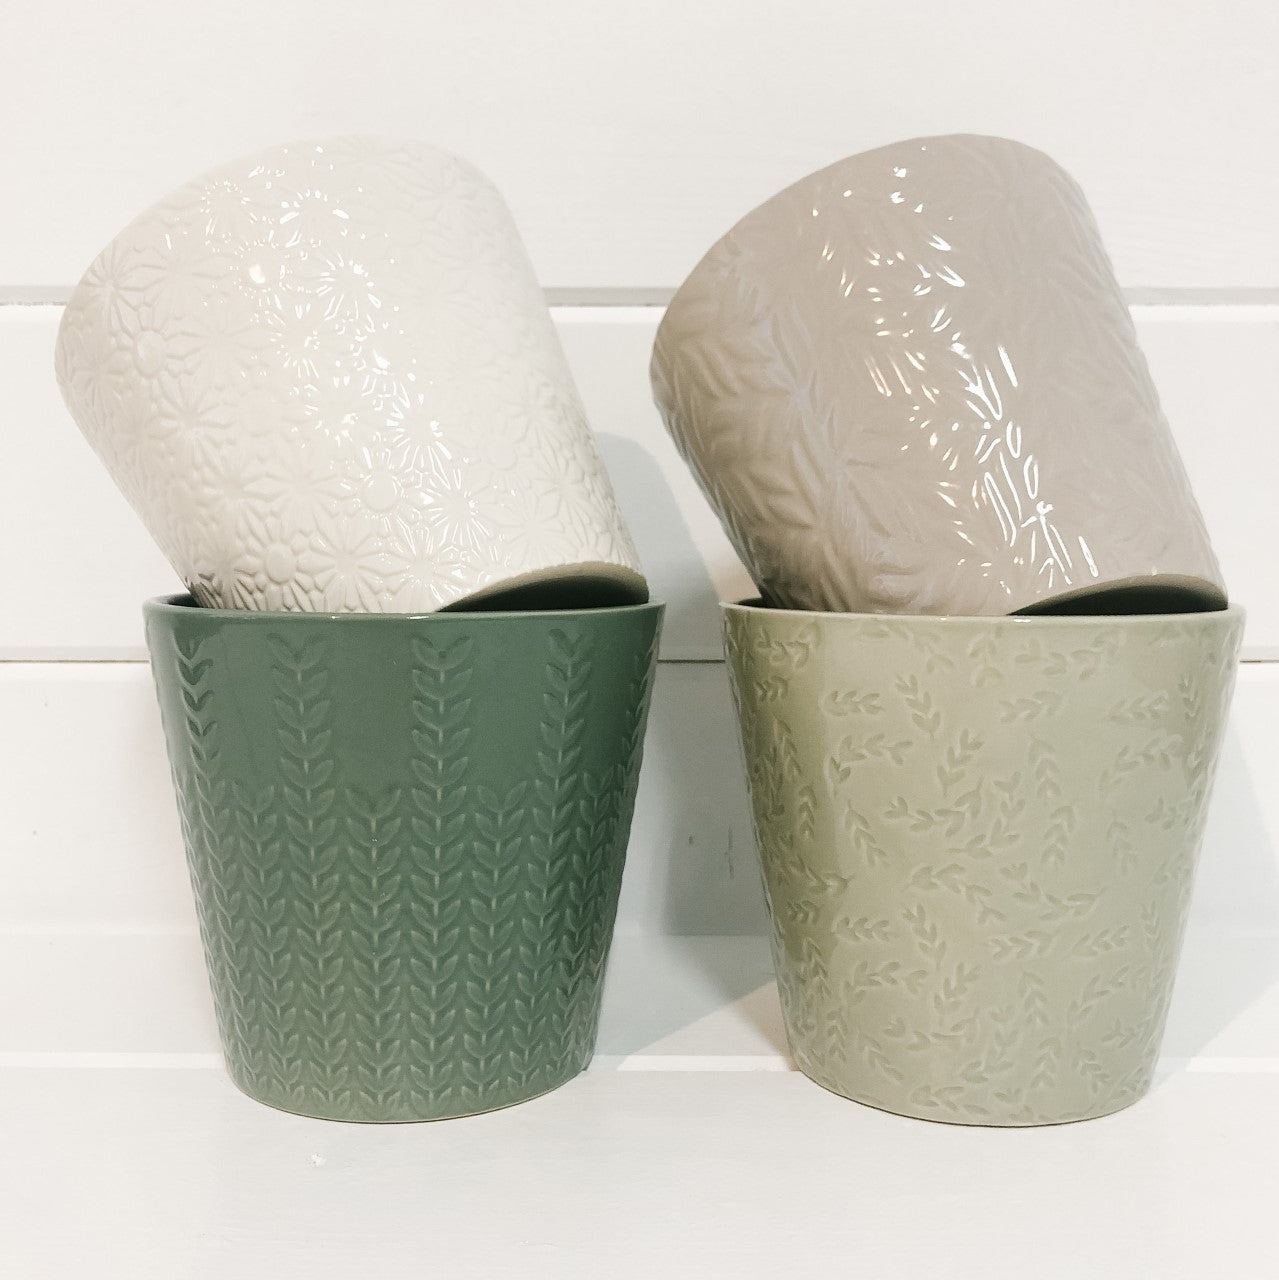 Textured Stoneware Pots